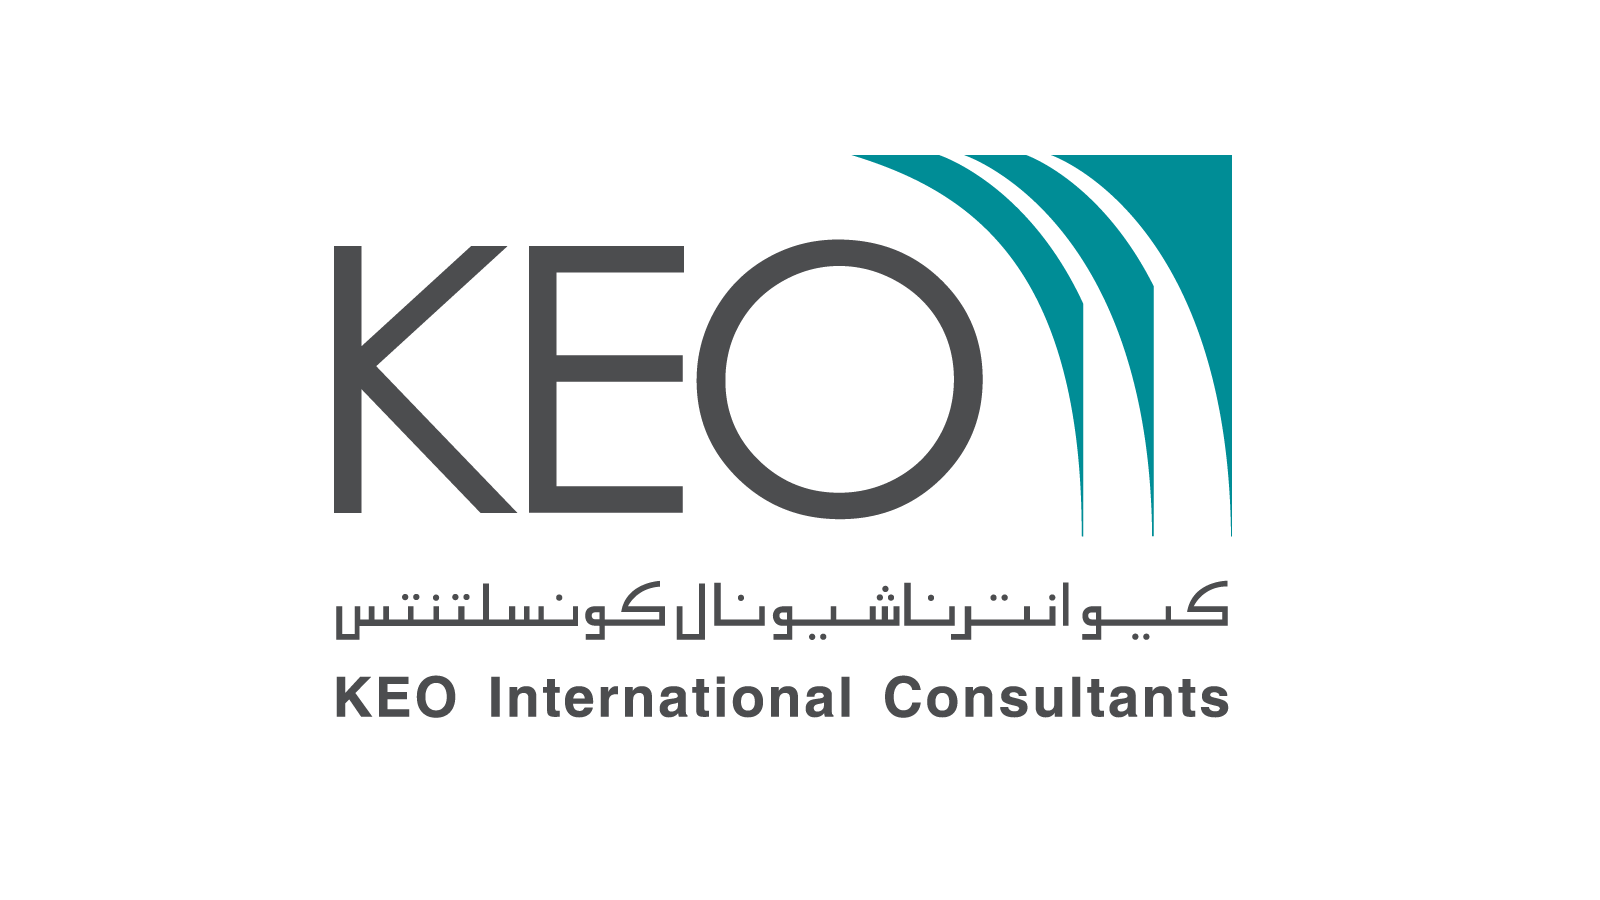 Keo Logo - KEO International Consultants logo